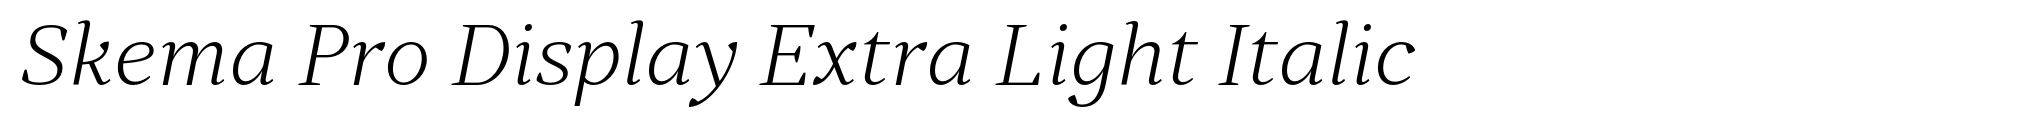 Skema Pro Display Extra Light Italic image